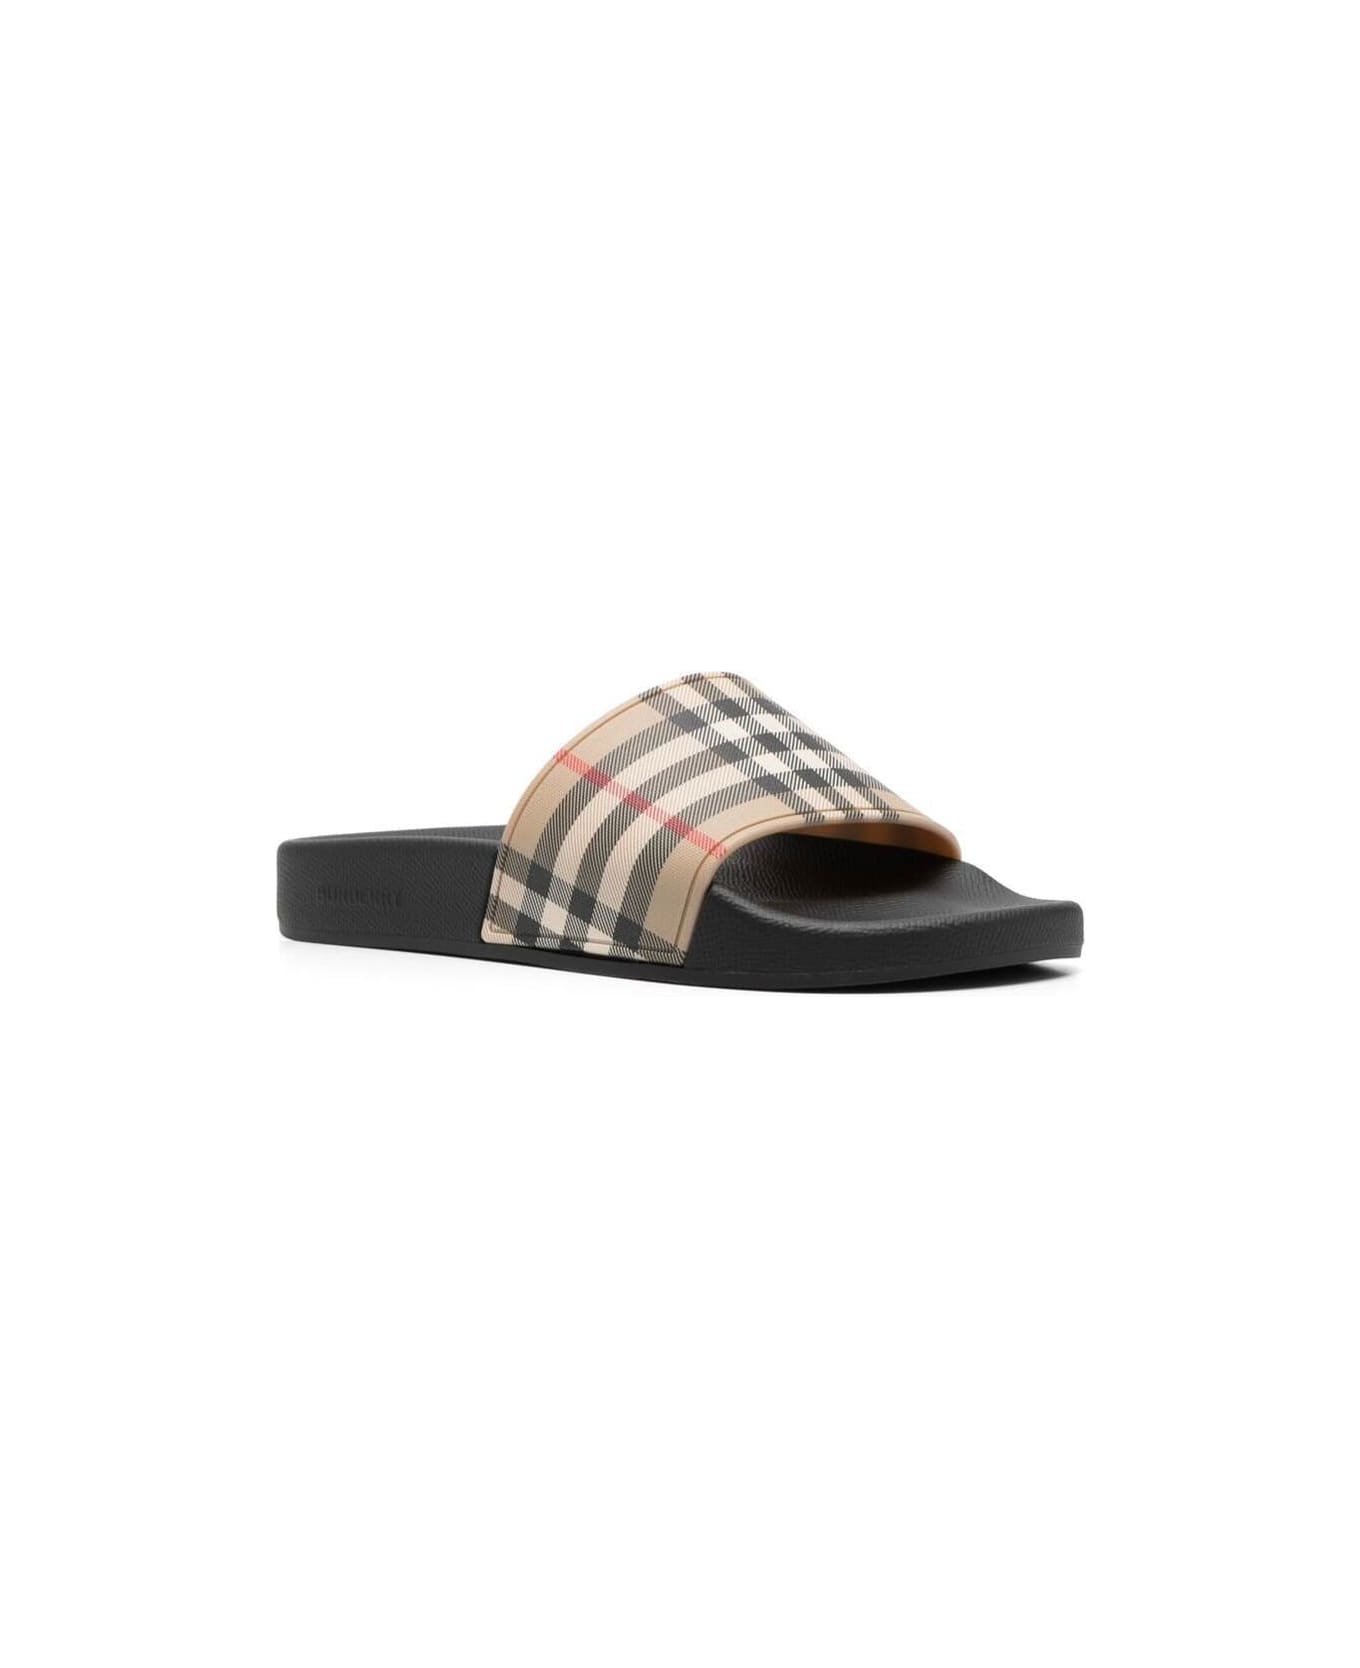 Burberry Brown Slides Sandals With Vintage Check Motif In Polyurethane - Beige